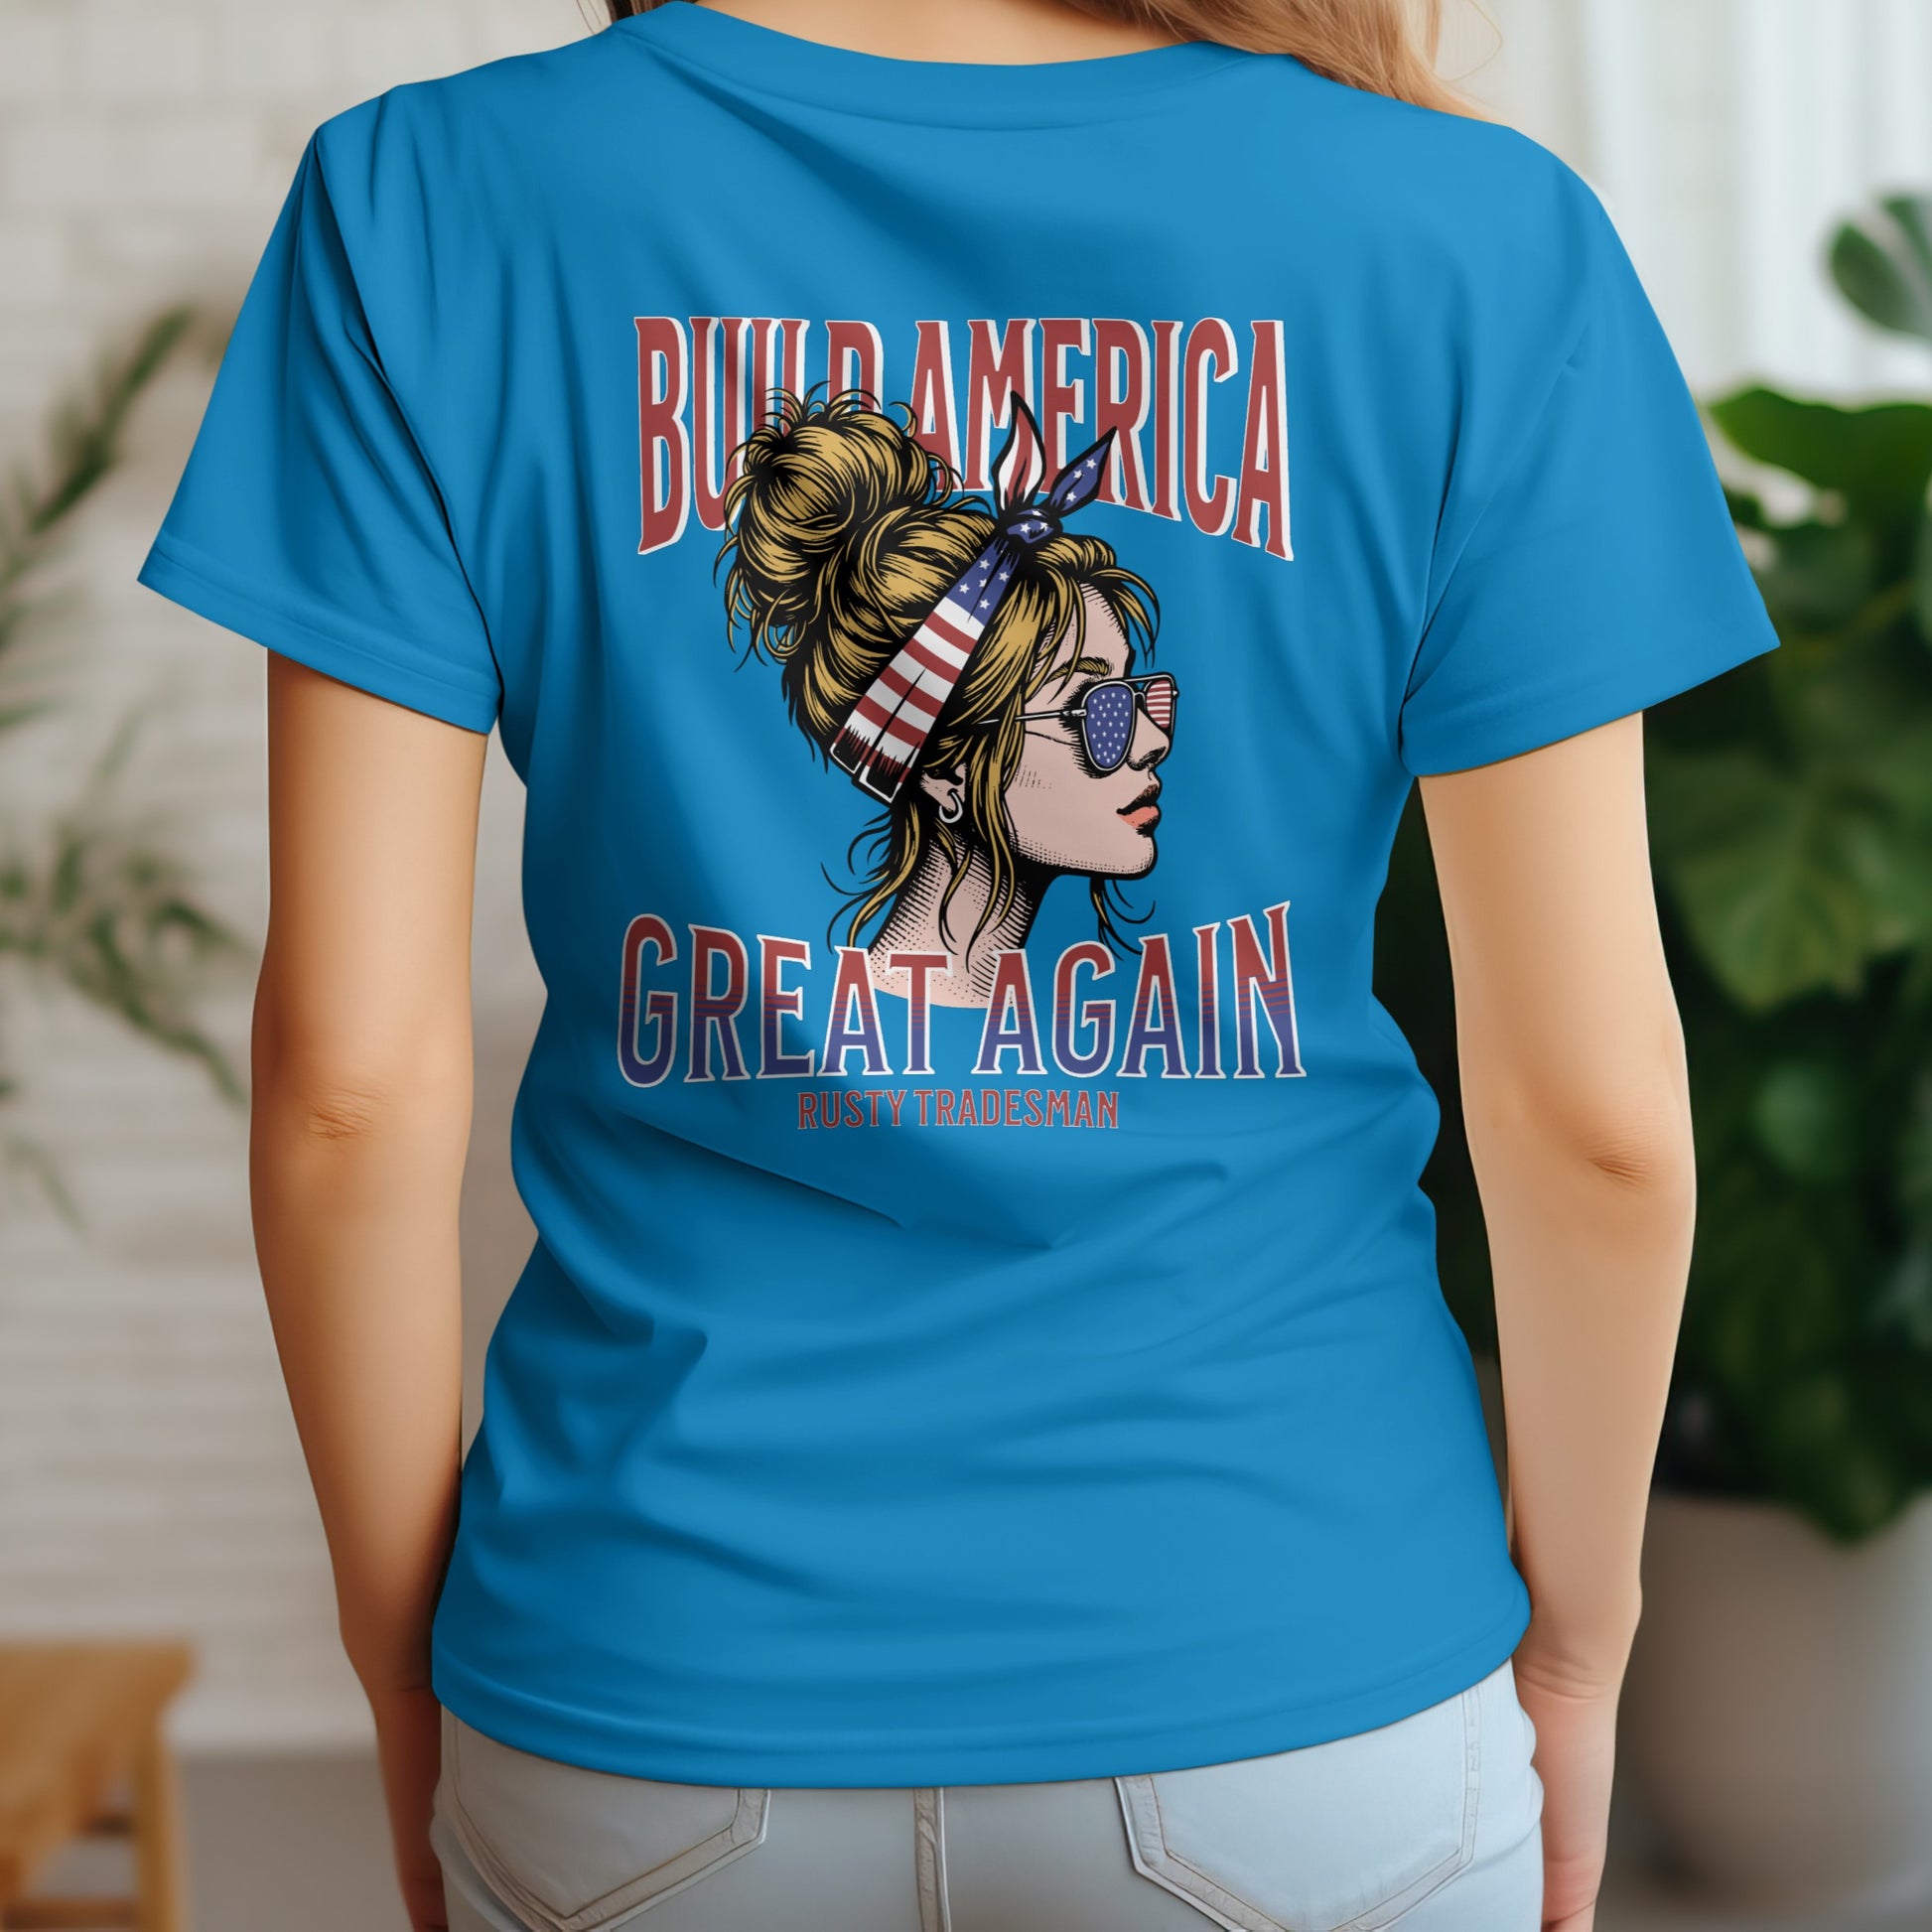 Build America Great Again T-Shirt